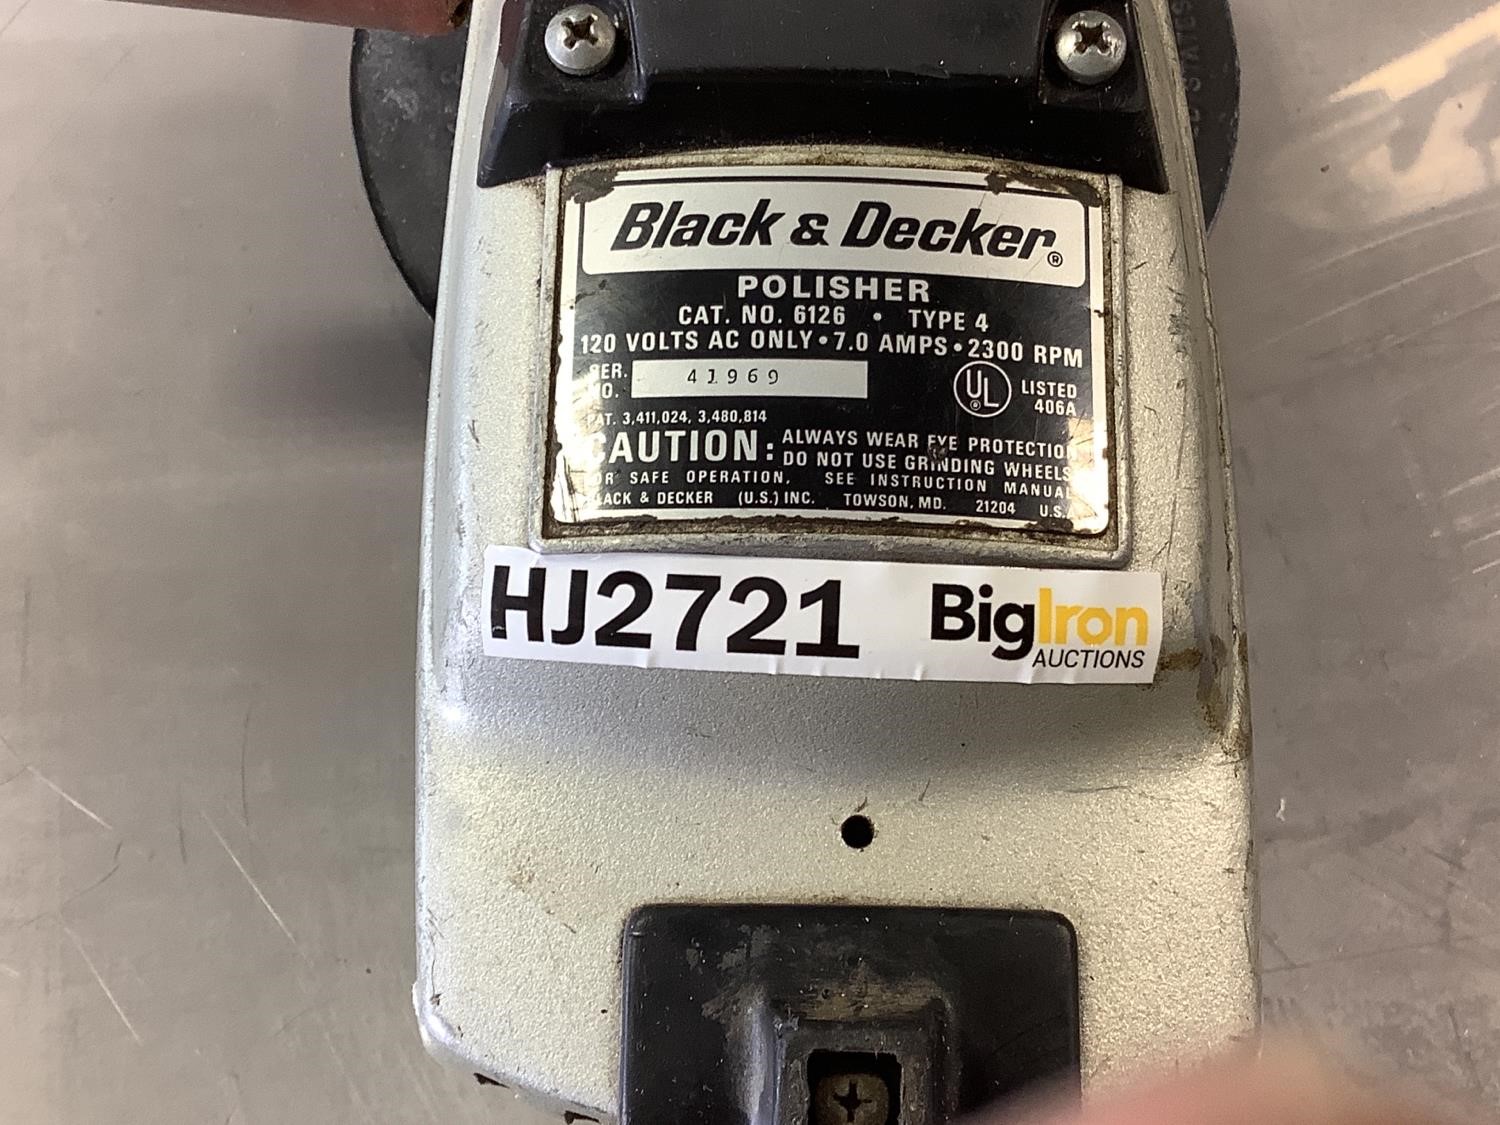 Black & Decker 6126 Heavy Duty Polisher Review 